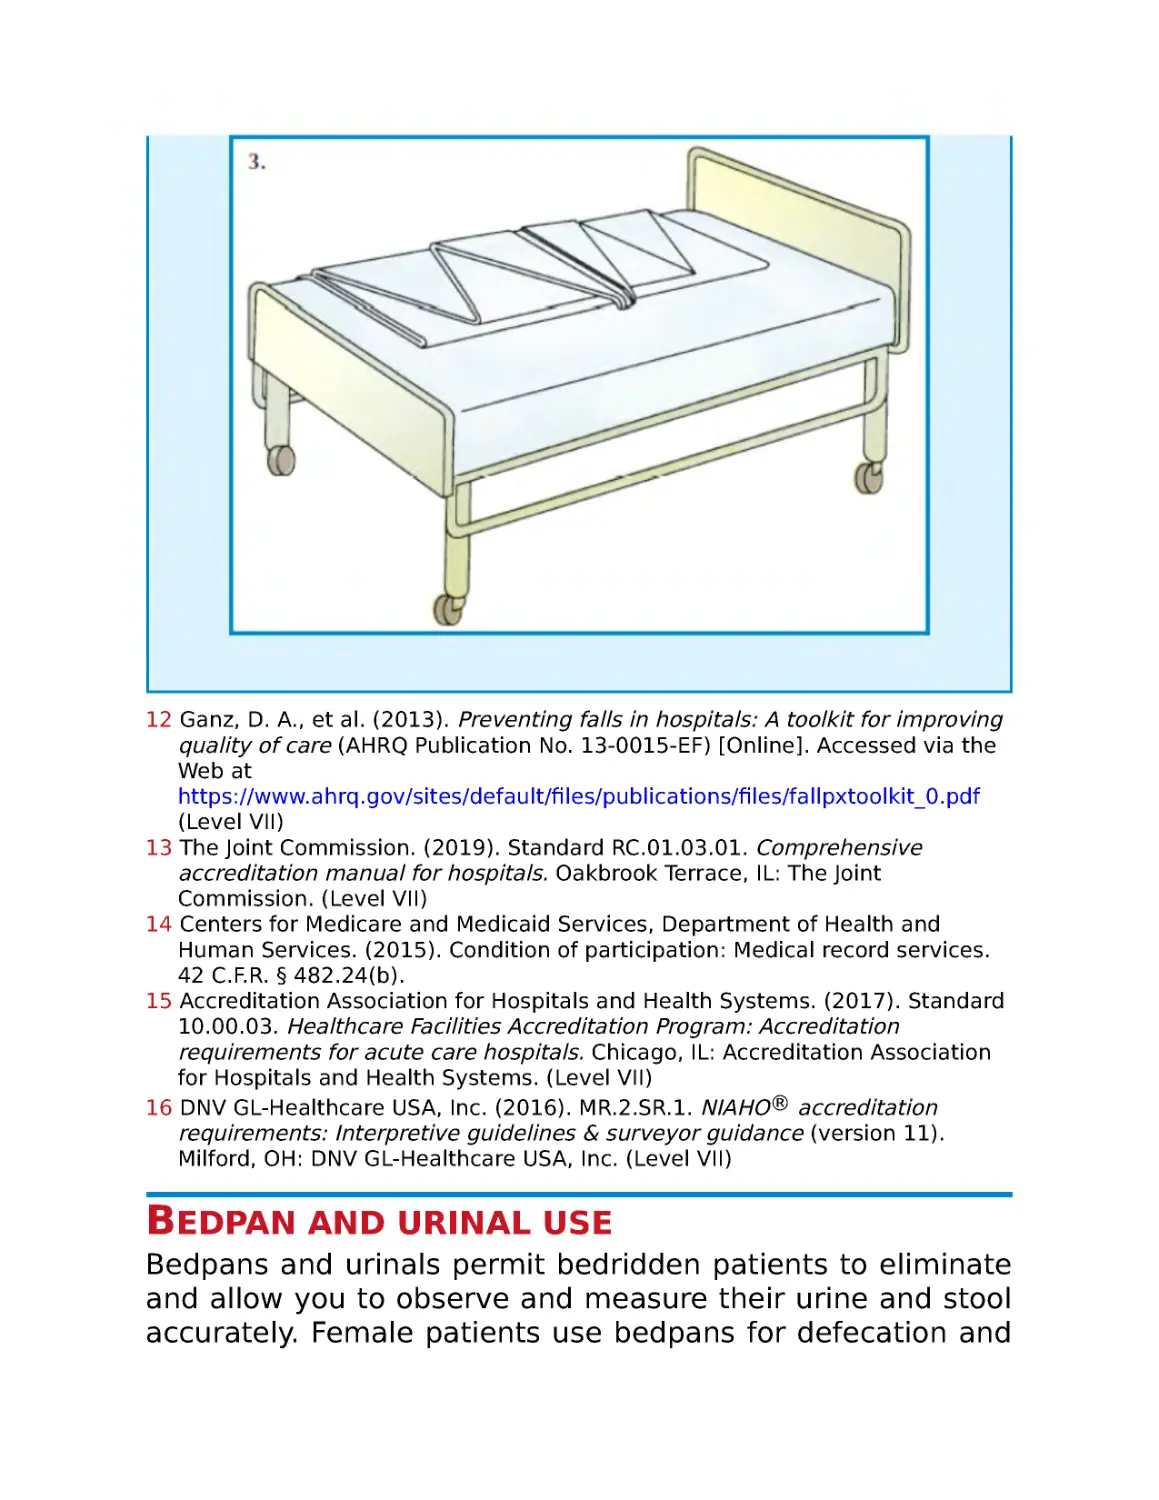 Bedpan and urinal use